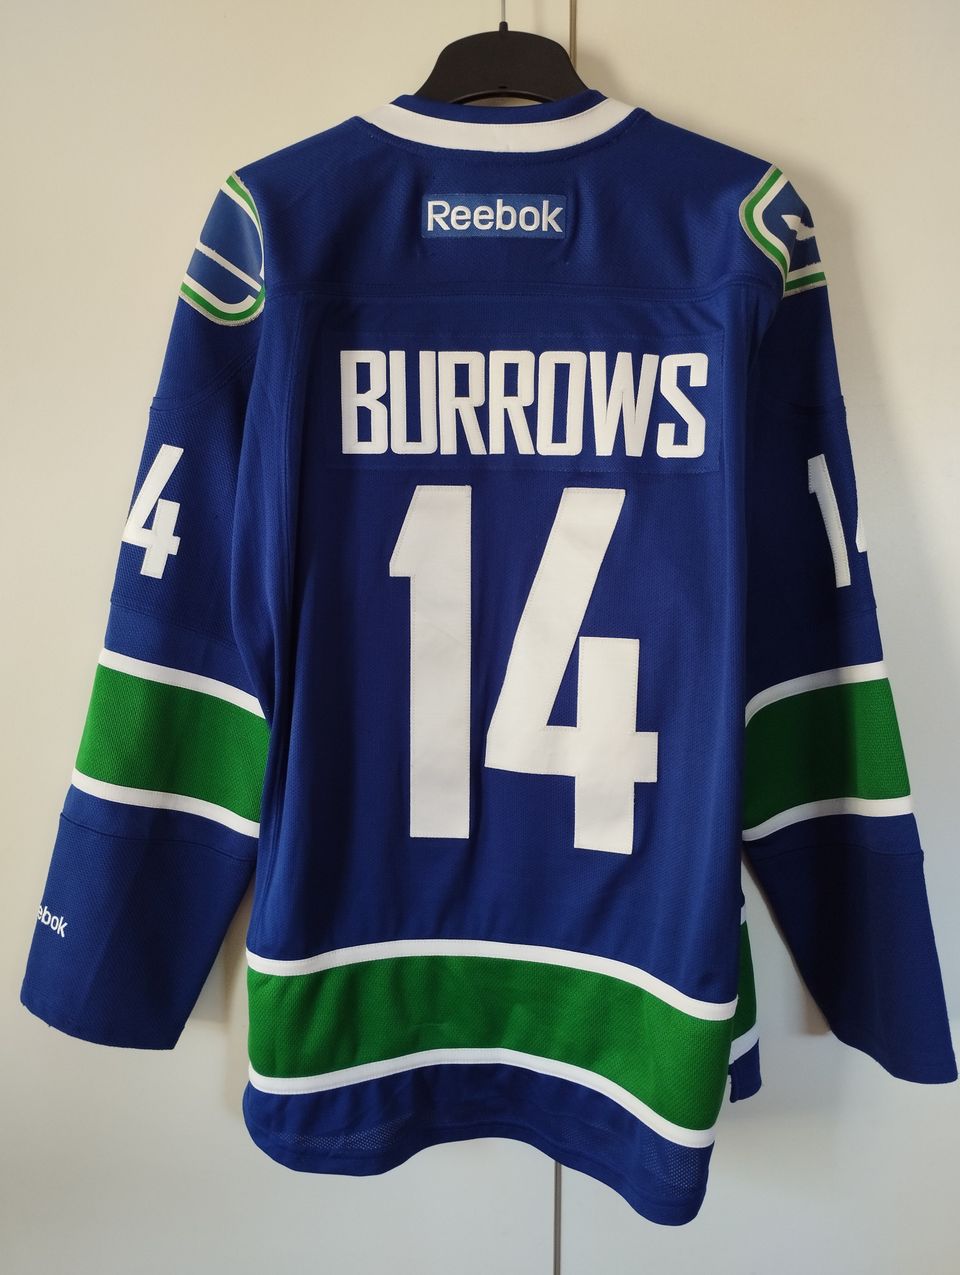 Aito Vancouver Canucks pelipaita Burrows #14